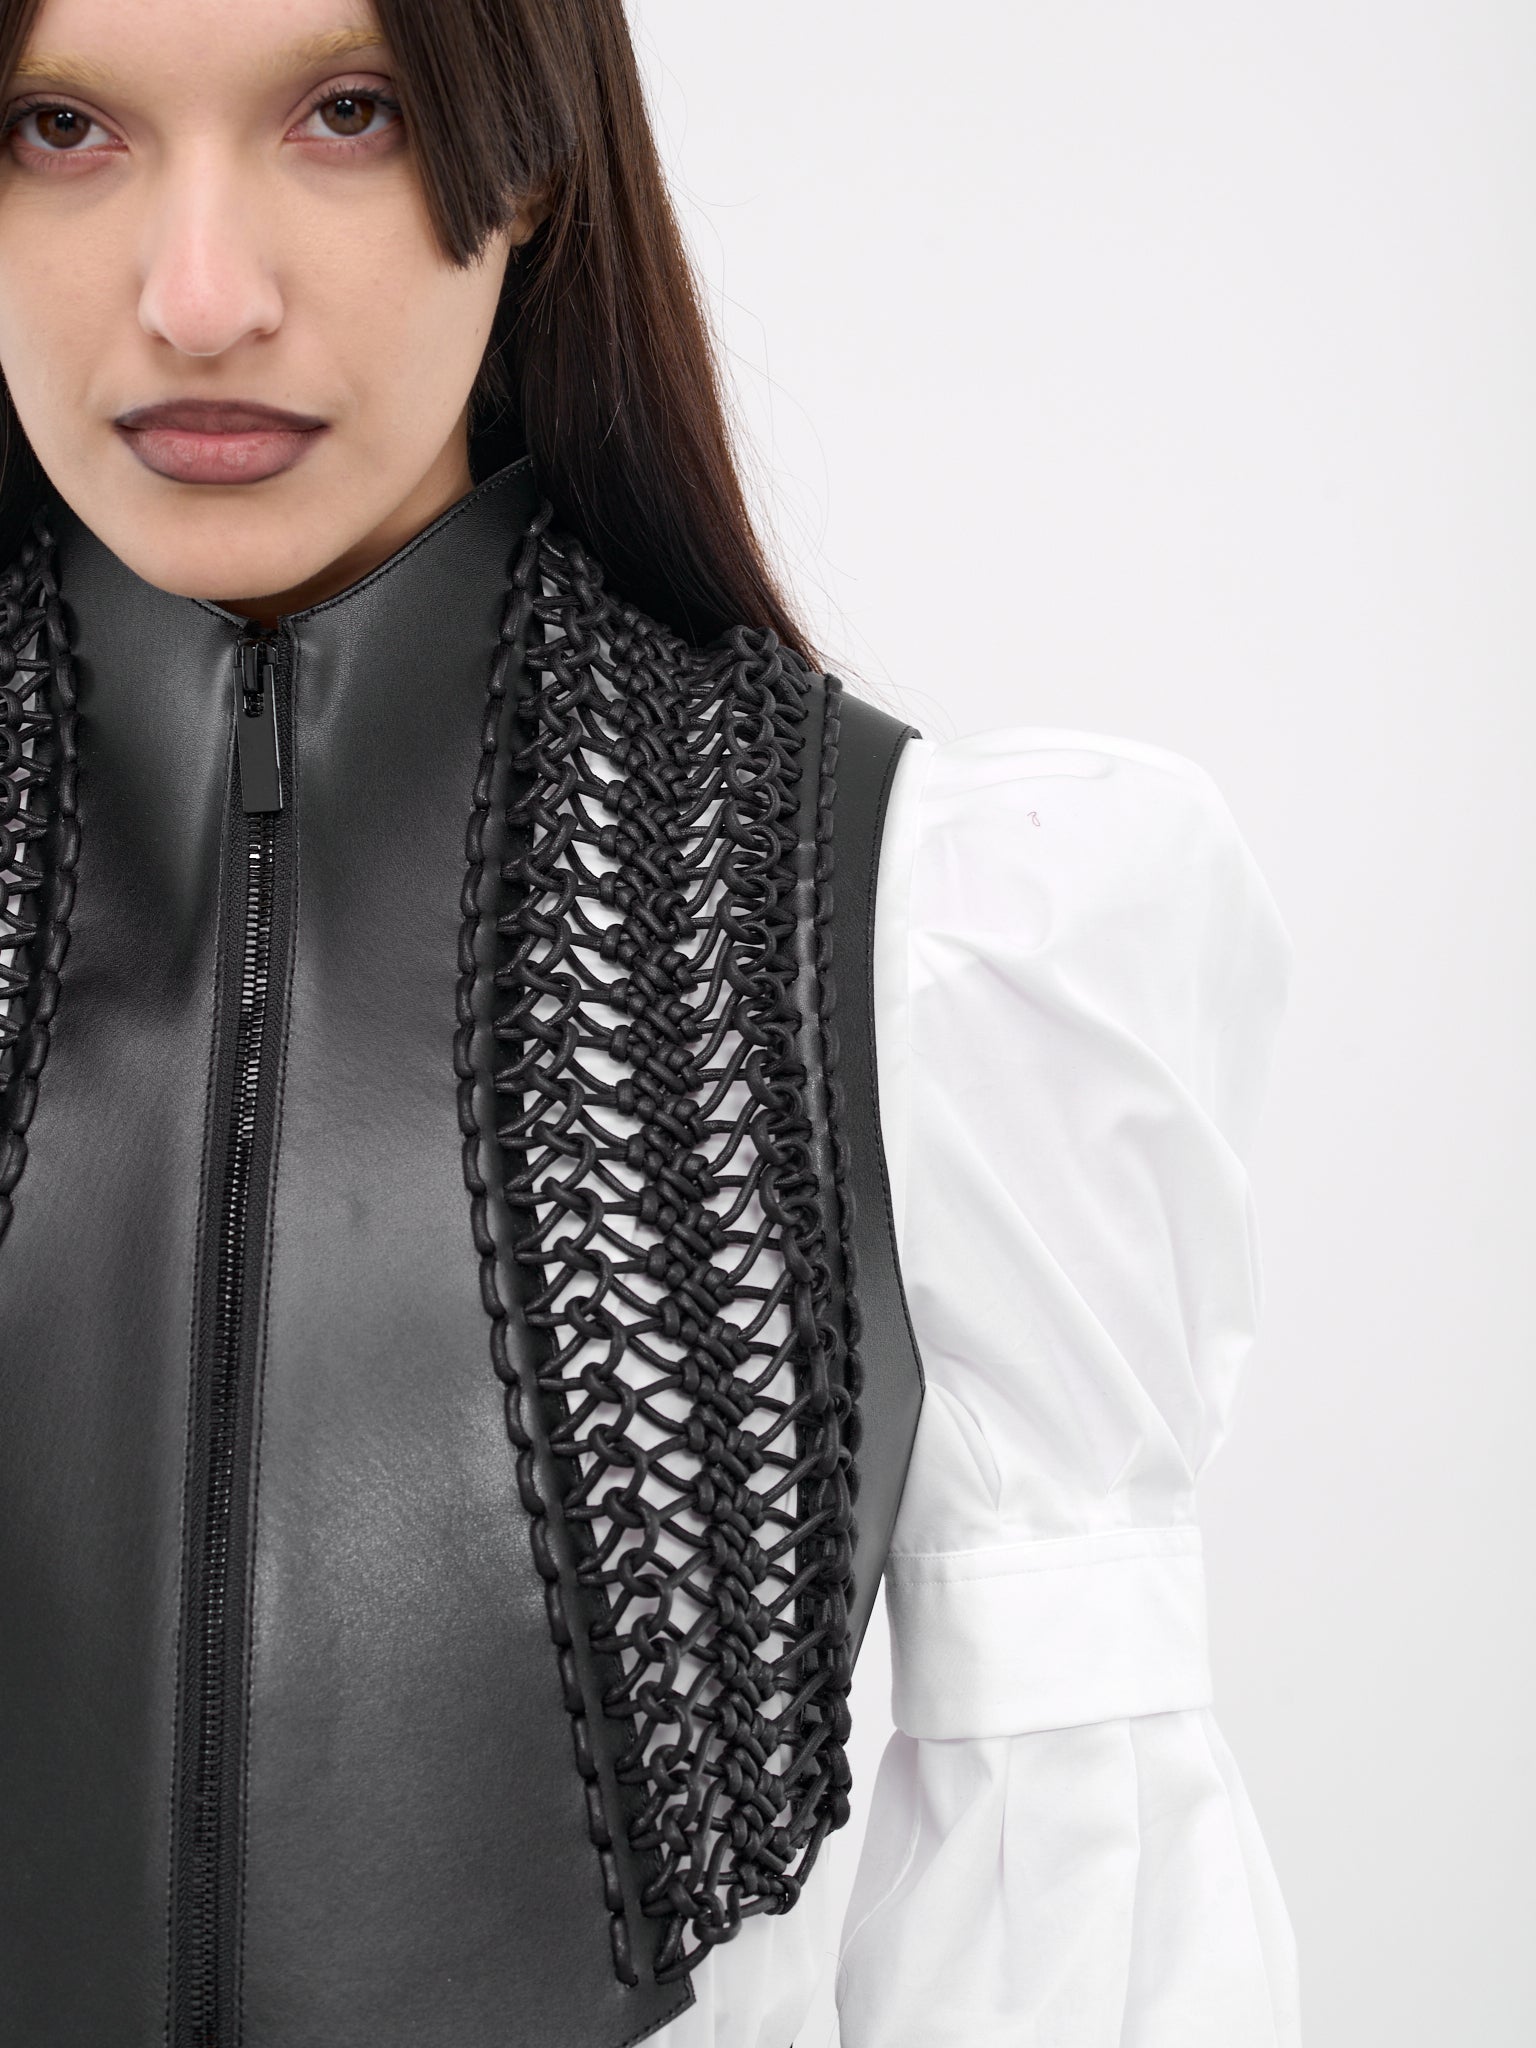 Synthetic Leather Vest (3M-V001-051-BLACK)